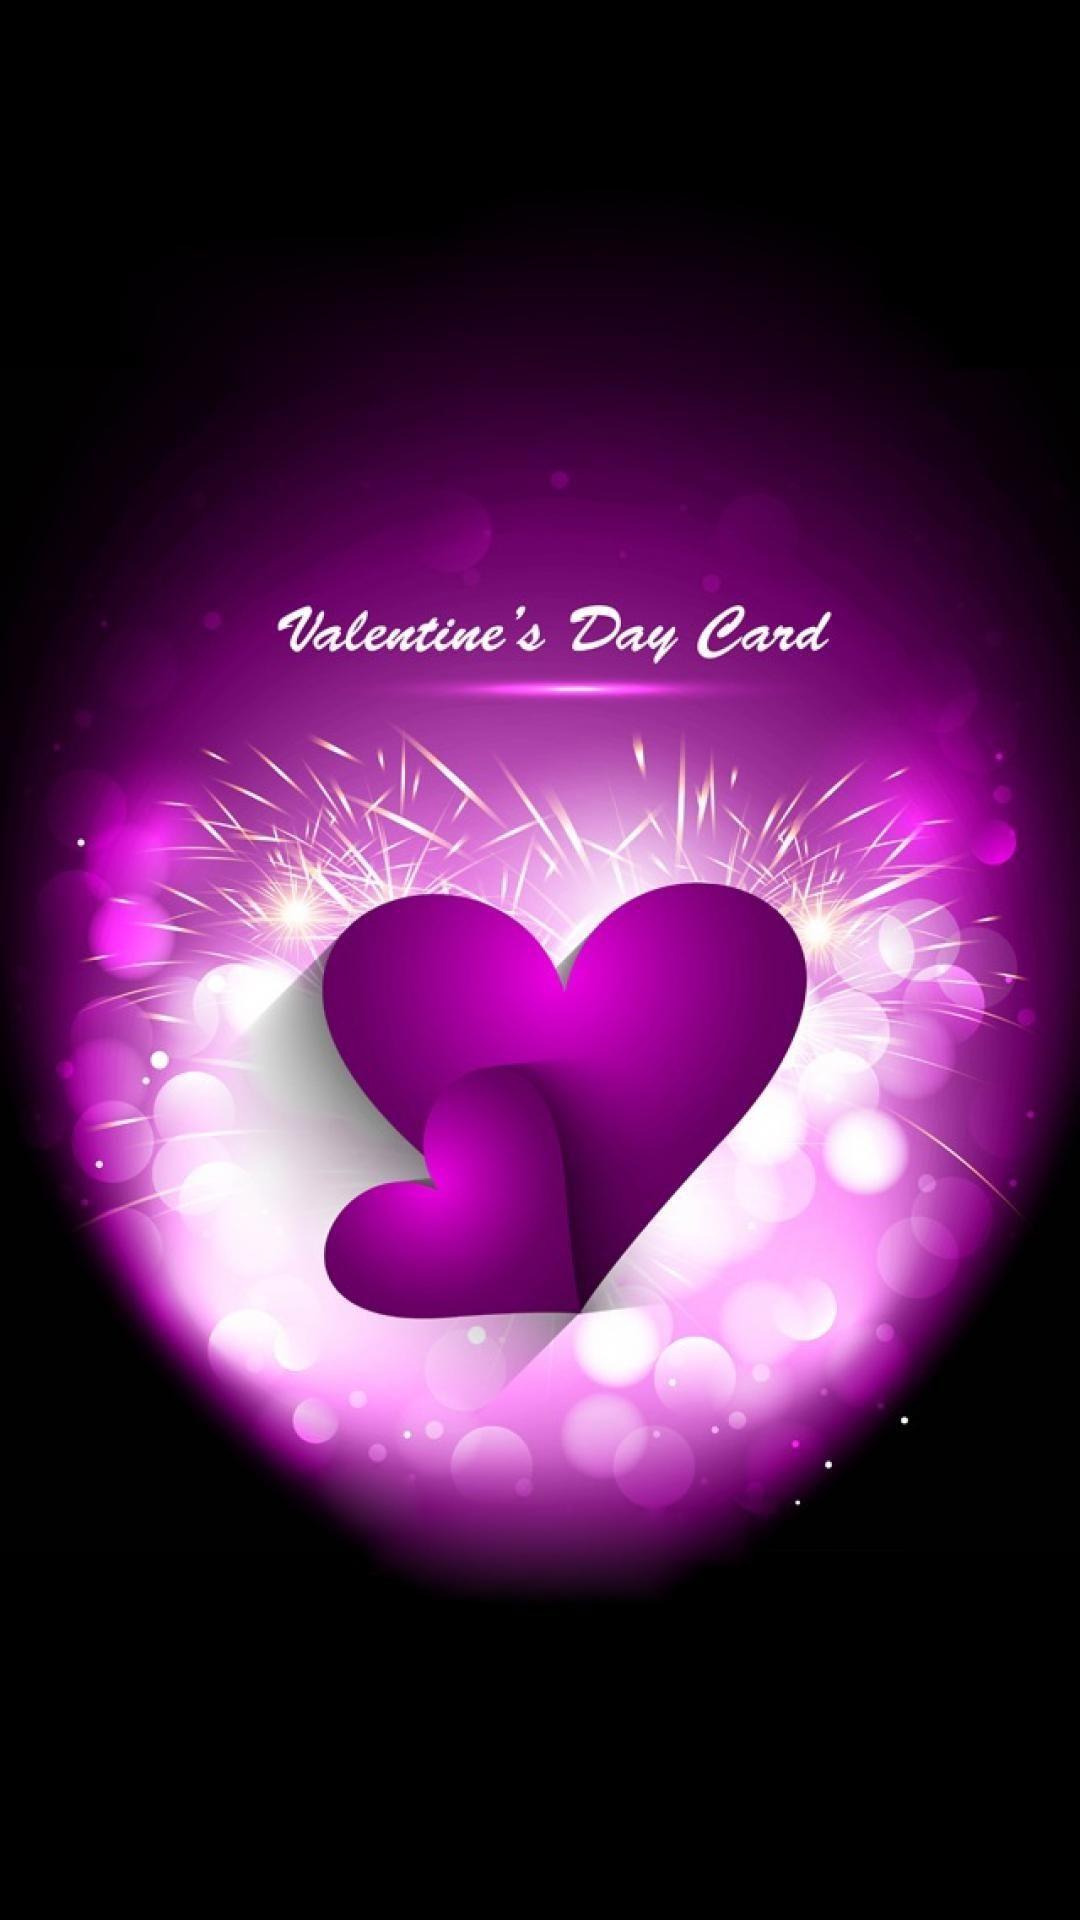 iphone 6 retina wallpaper. Valentine's day greeting cards, Purple valentine, Happy valentines day image